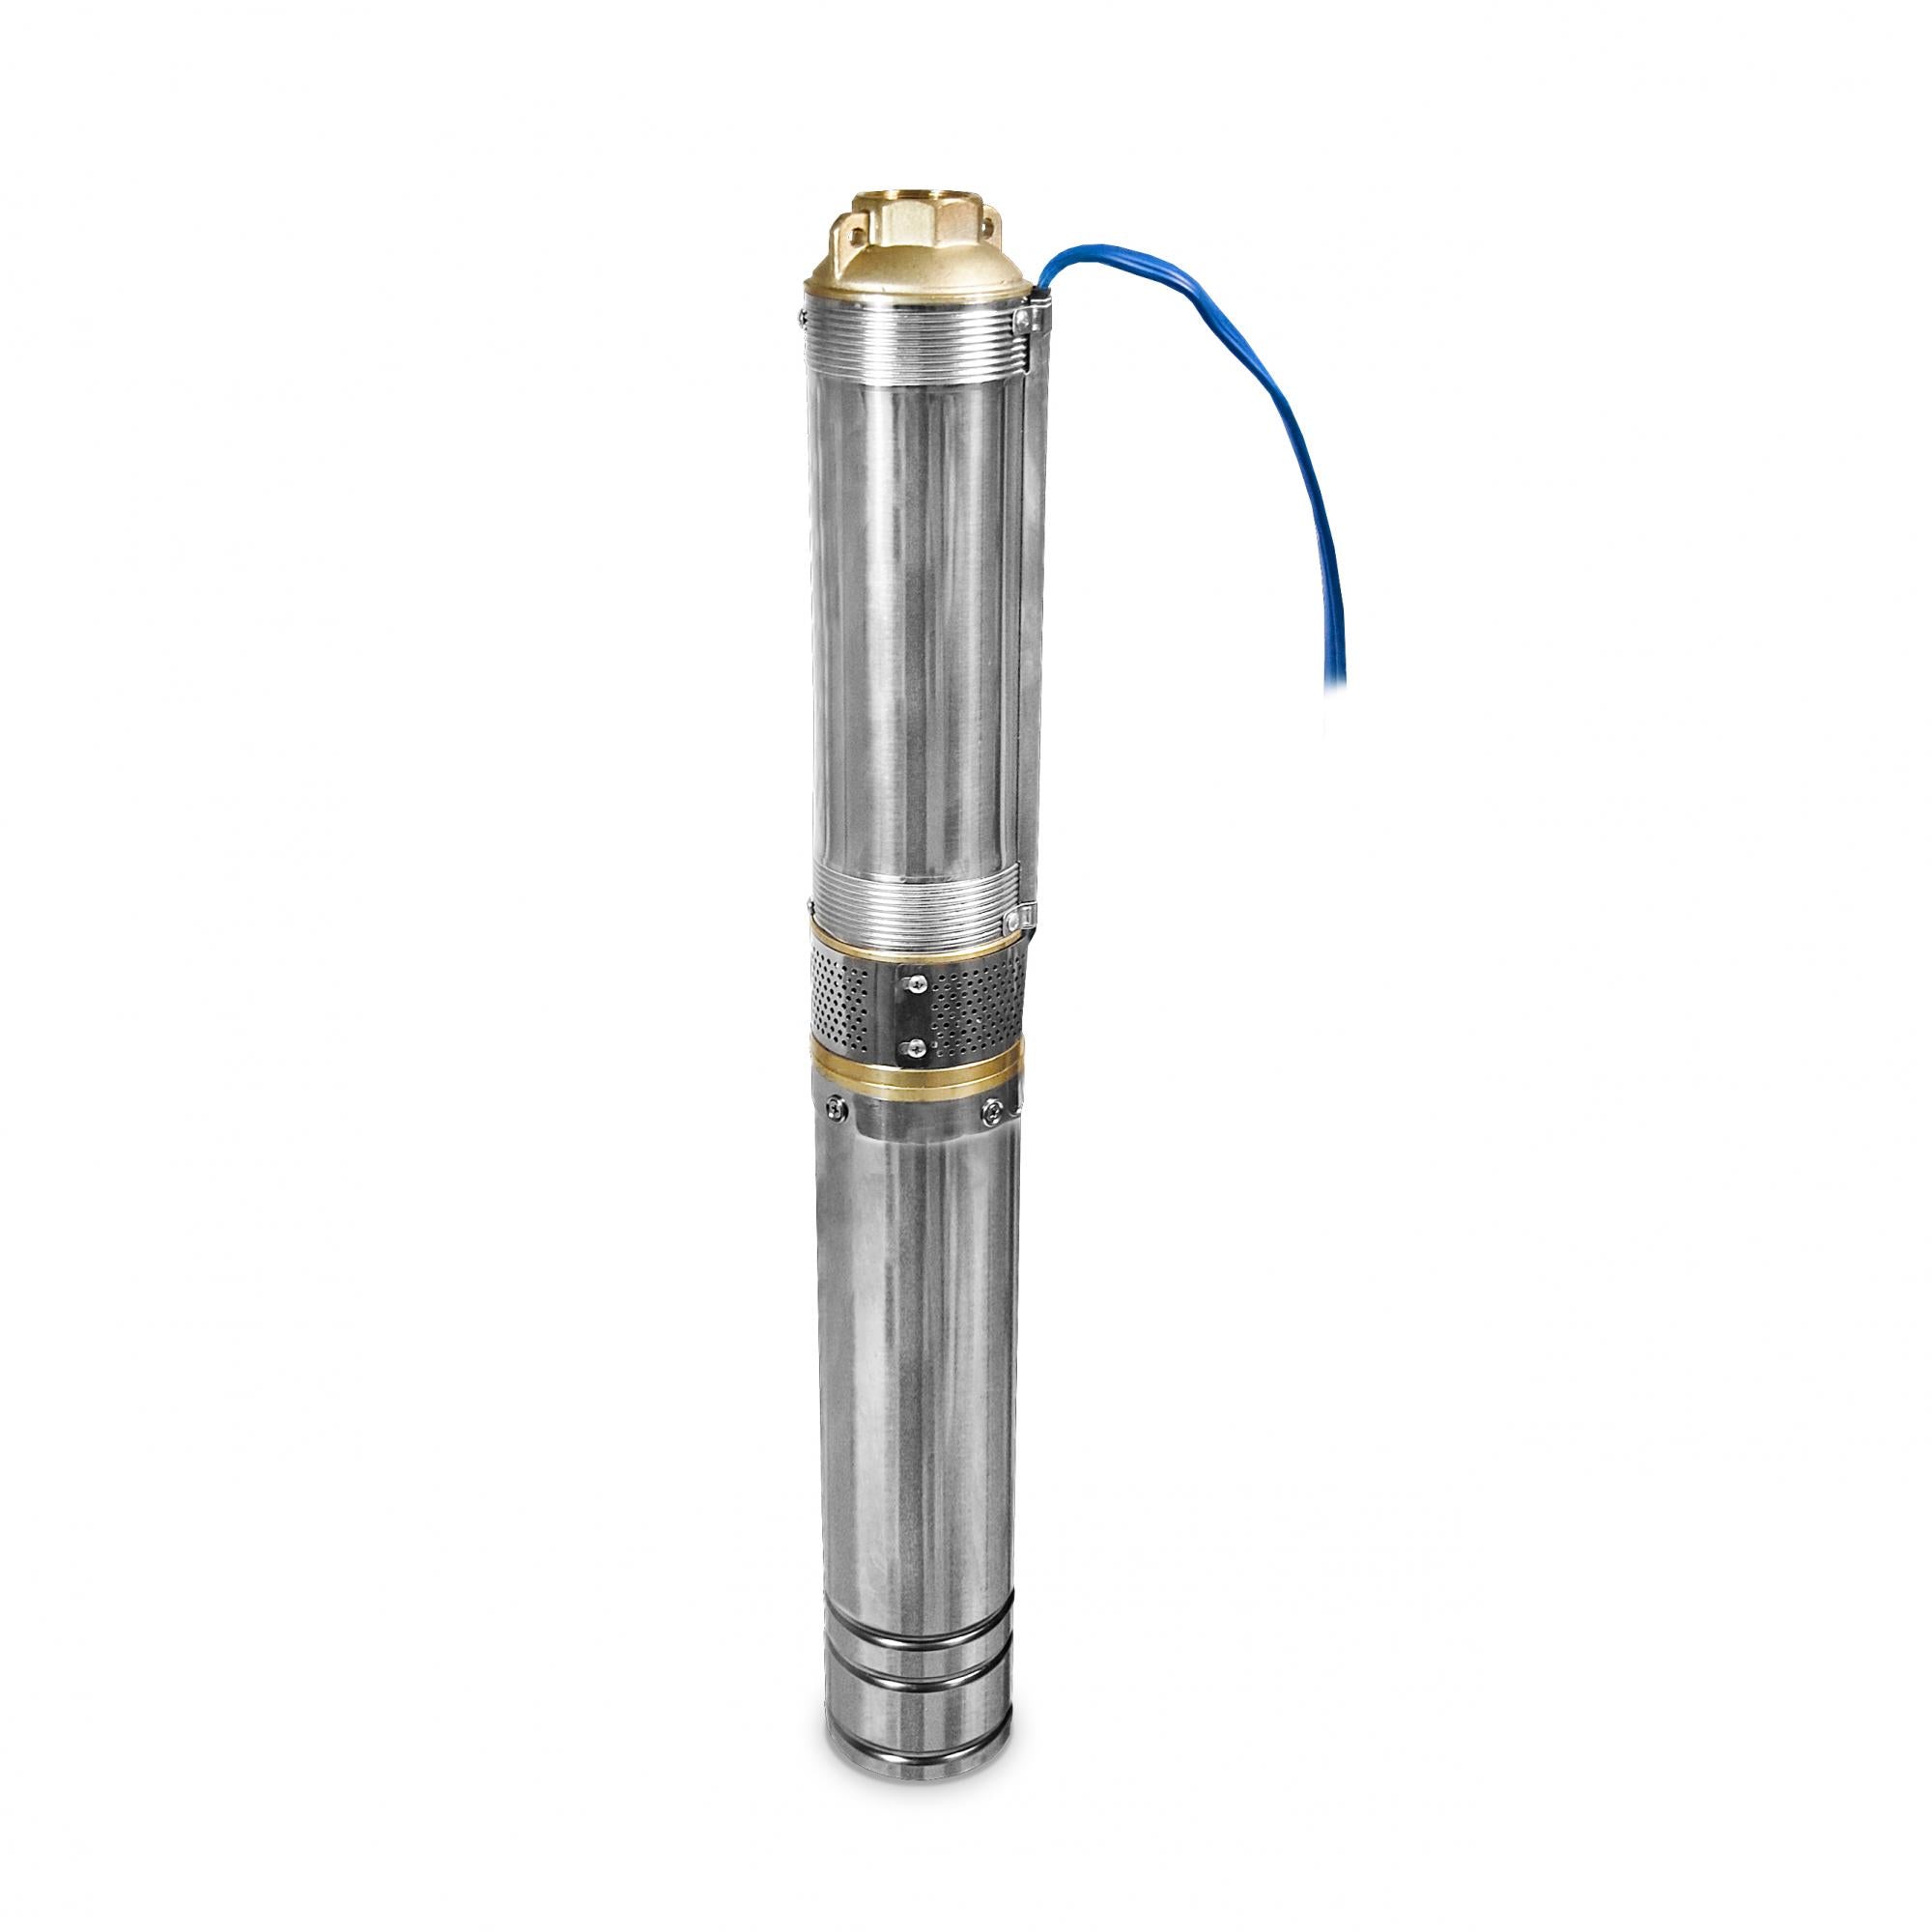 Pompa per pozzi profondi - Pompa sommersa - Elettropompa 3,4 bar max.